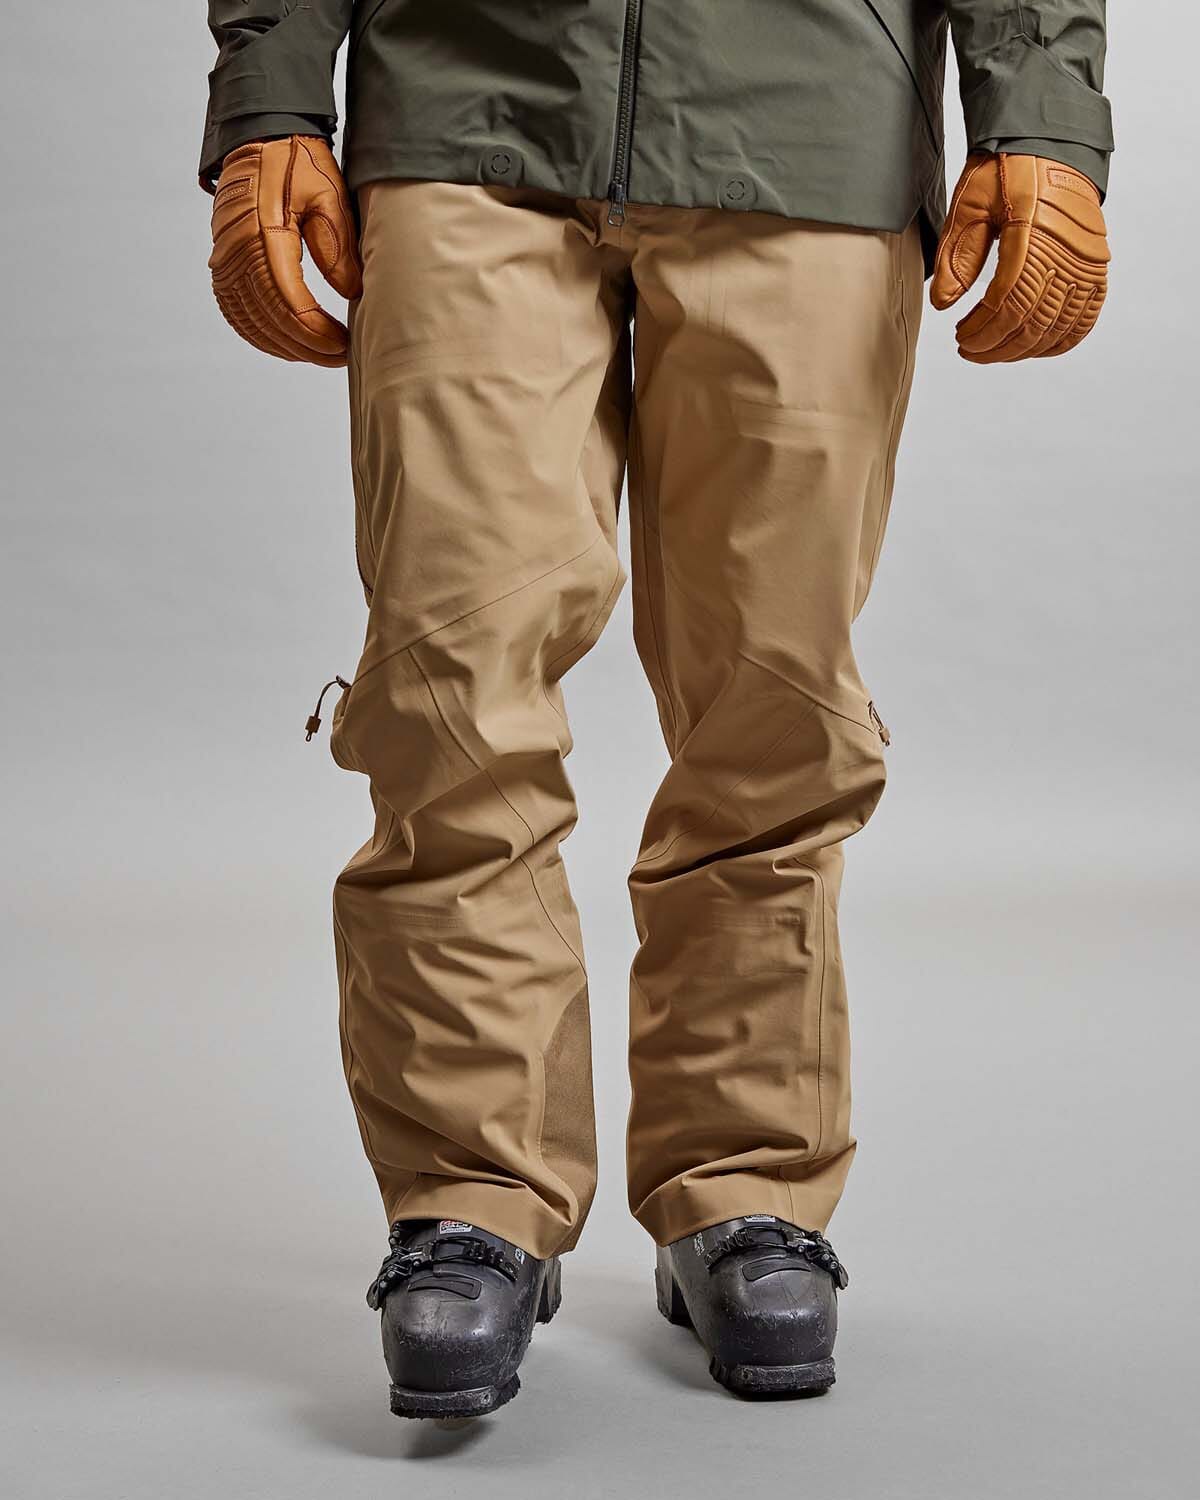 Y-3 Men's GORE-TEX PRO 3L Soft Backing Pant Ski Pants The Mountain Studio Sand S 